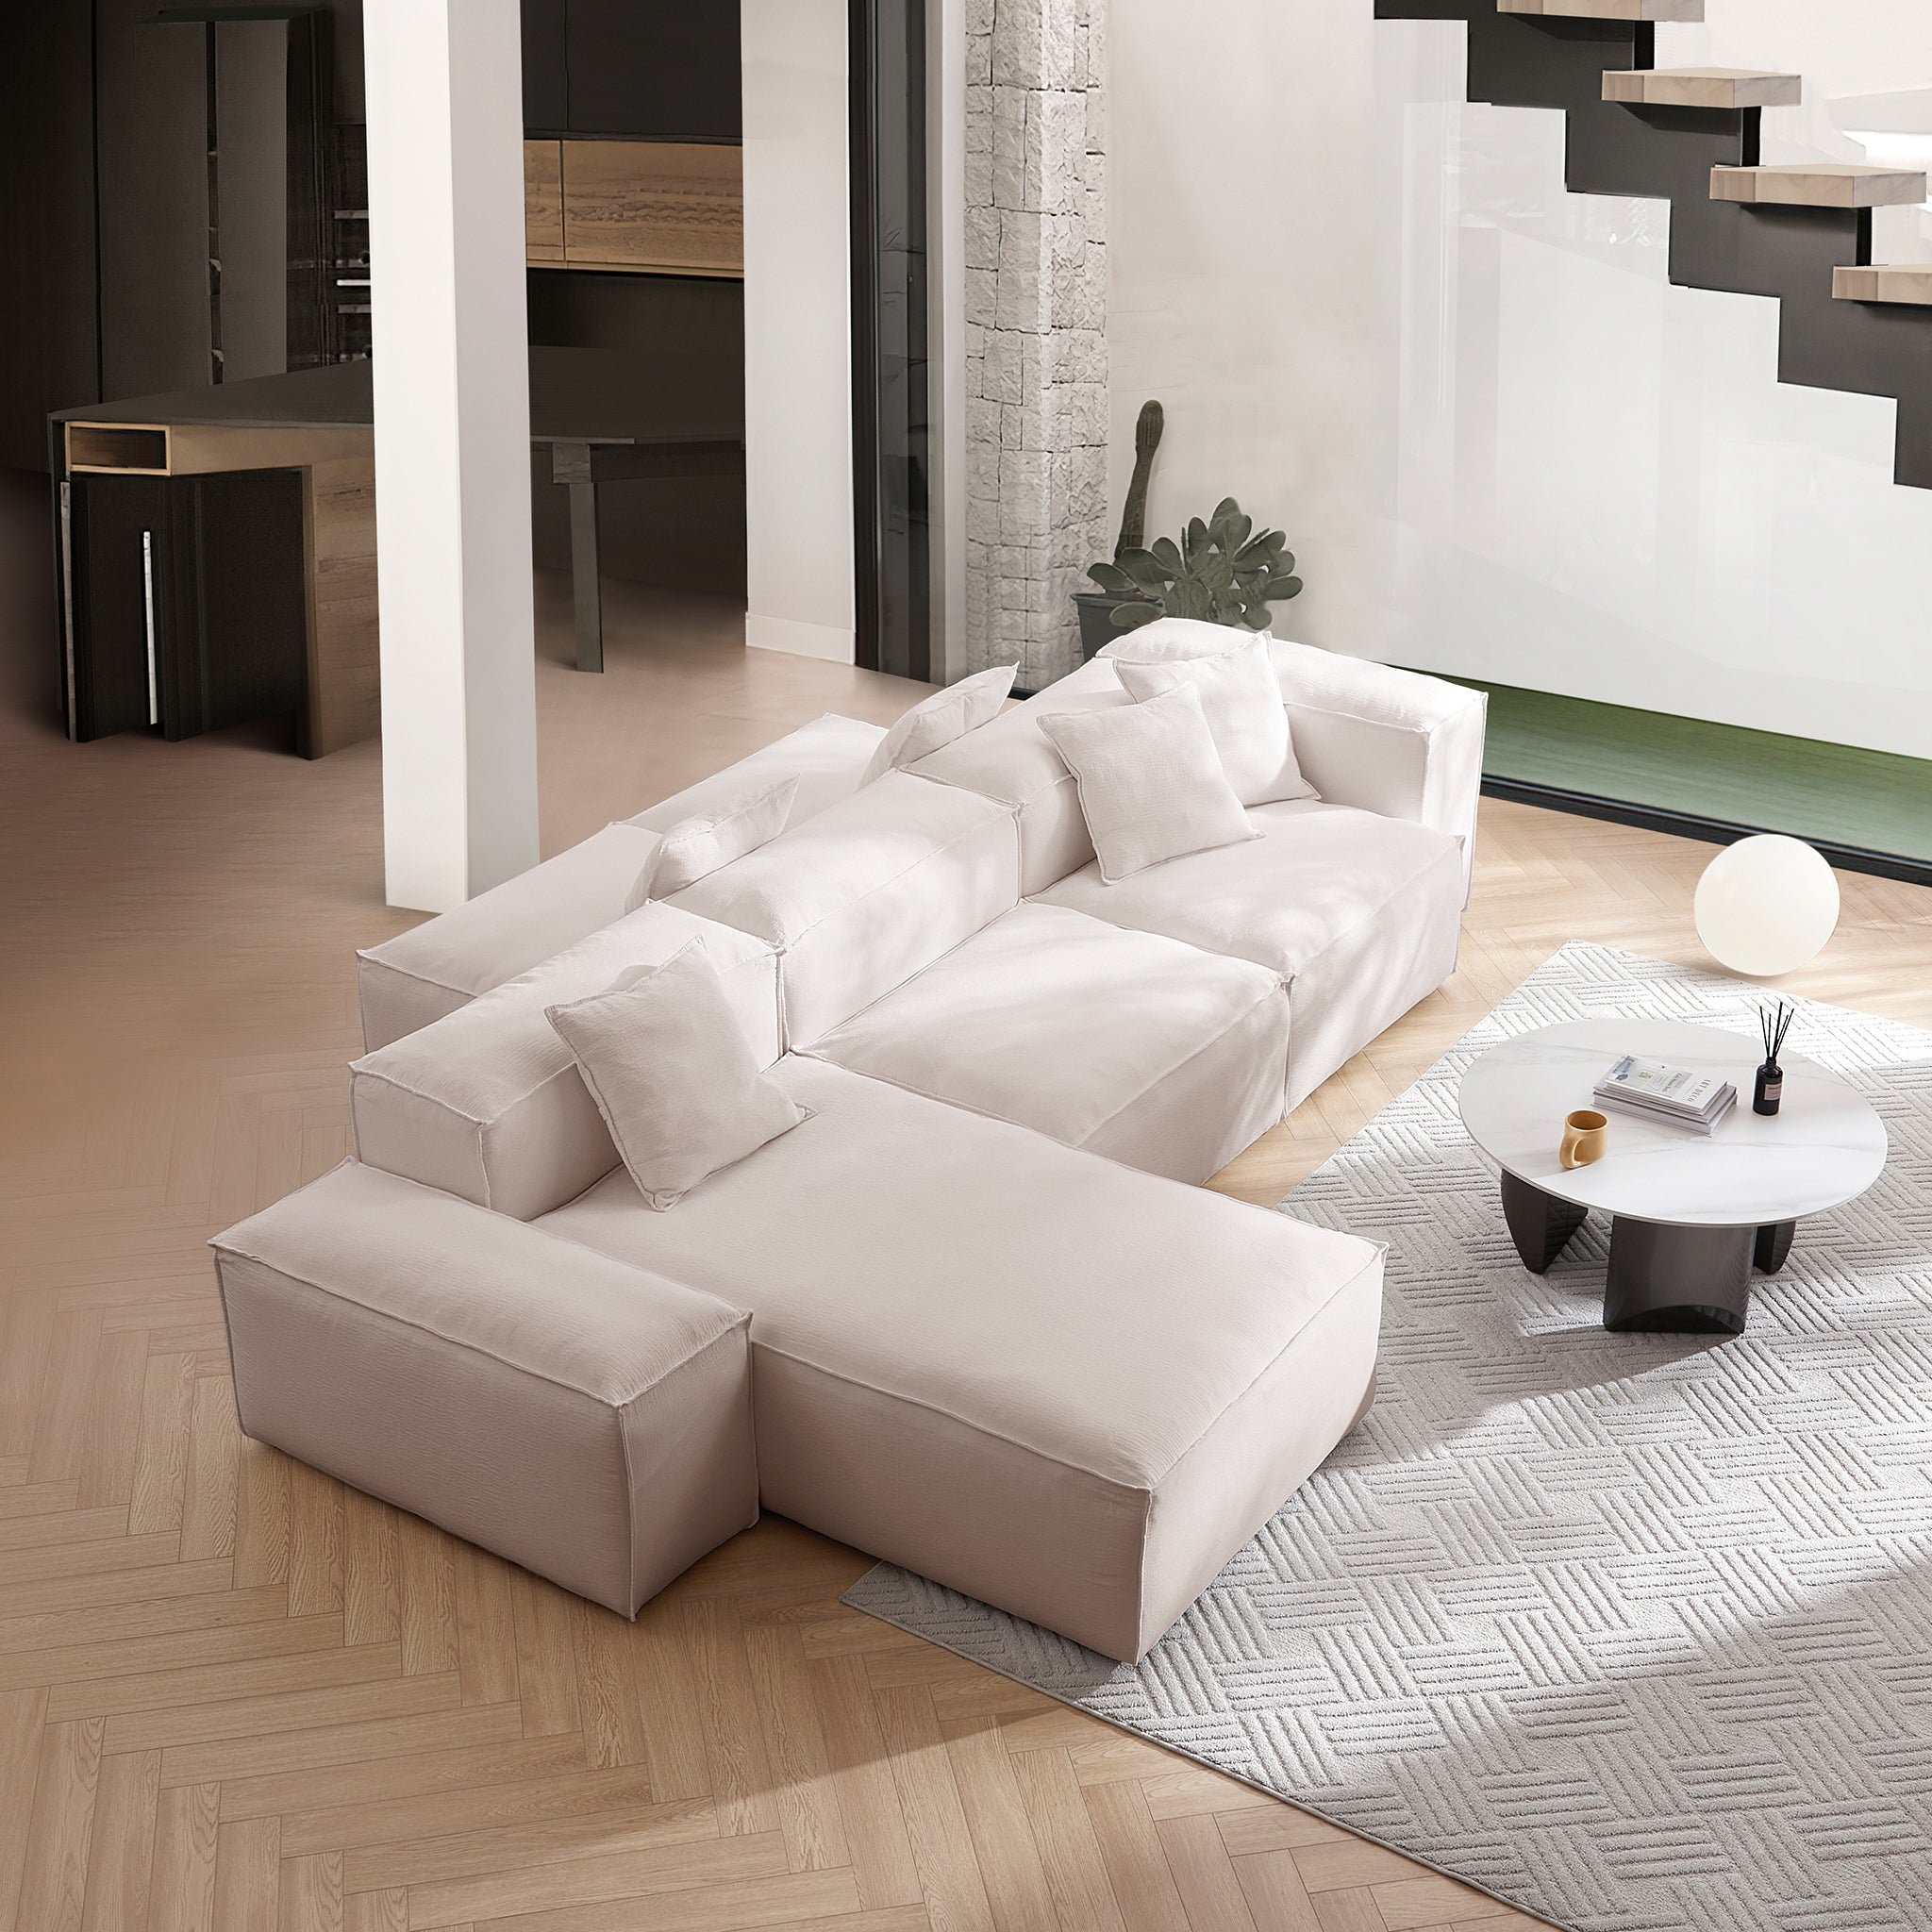 Freedom Modular Khaki Double-Sided Sectional Sofa